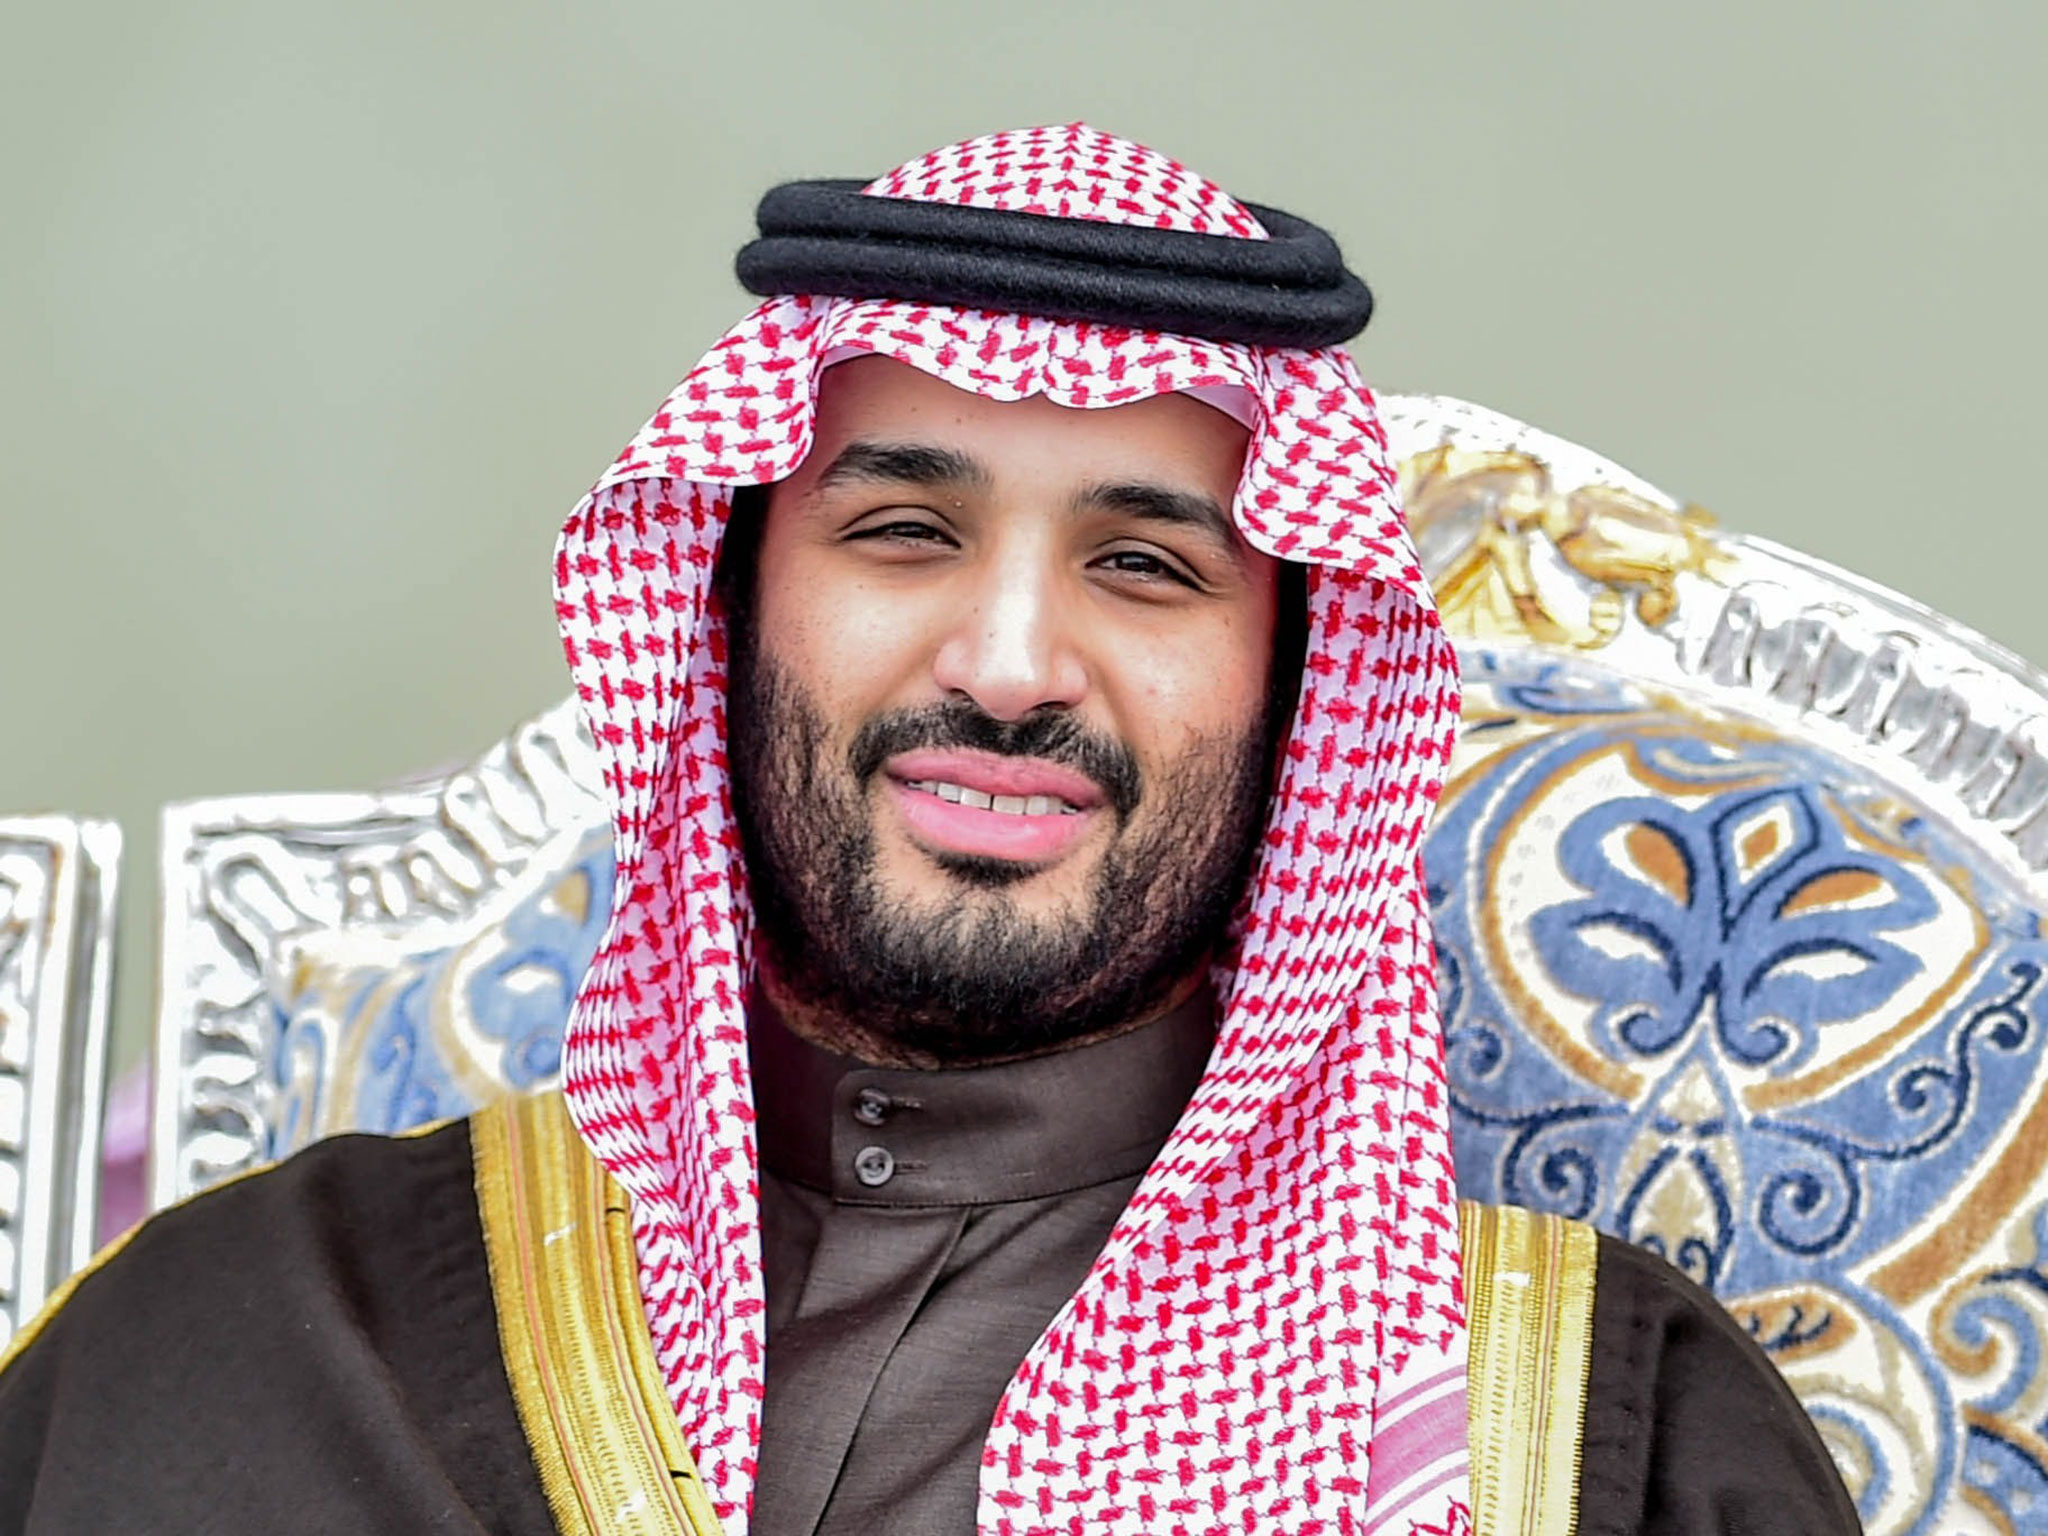 Имена саудовской аравии. Мохаммед Бин Салман. Принц Мухаммед Бен Салман. Саудовский принц Мохаммед Бин Салман. Бен Сальман наследный принц Саудовской Аравии.